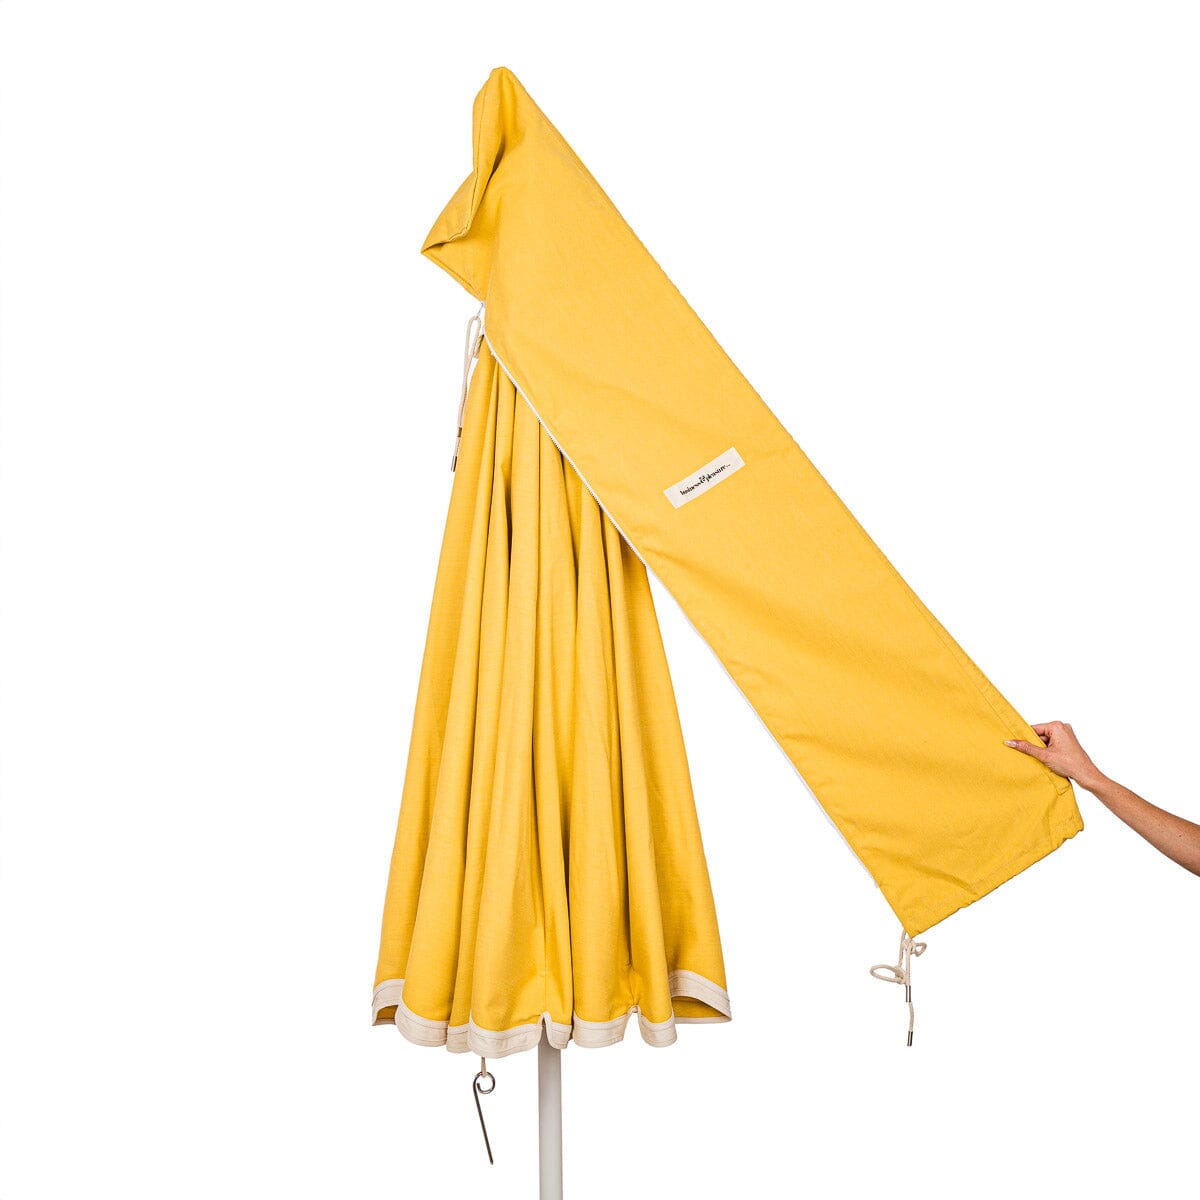 carry bag detail of yellow patio umbrella